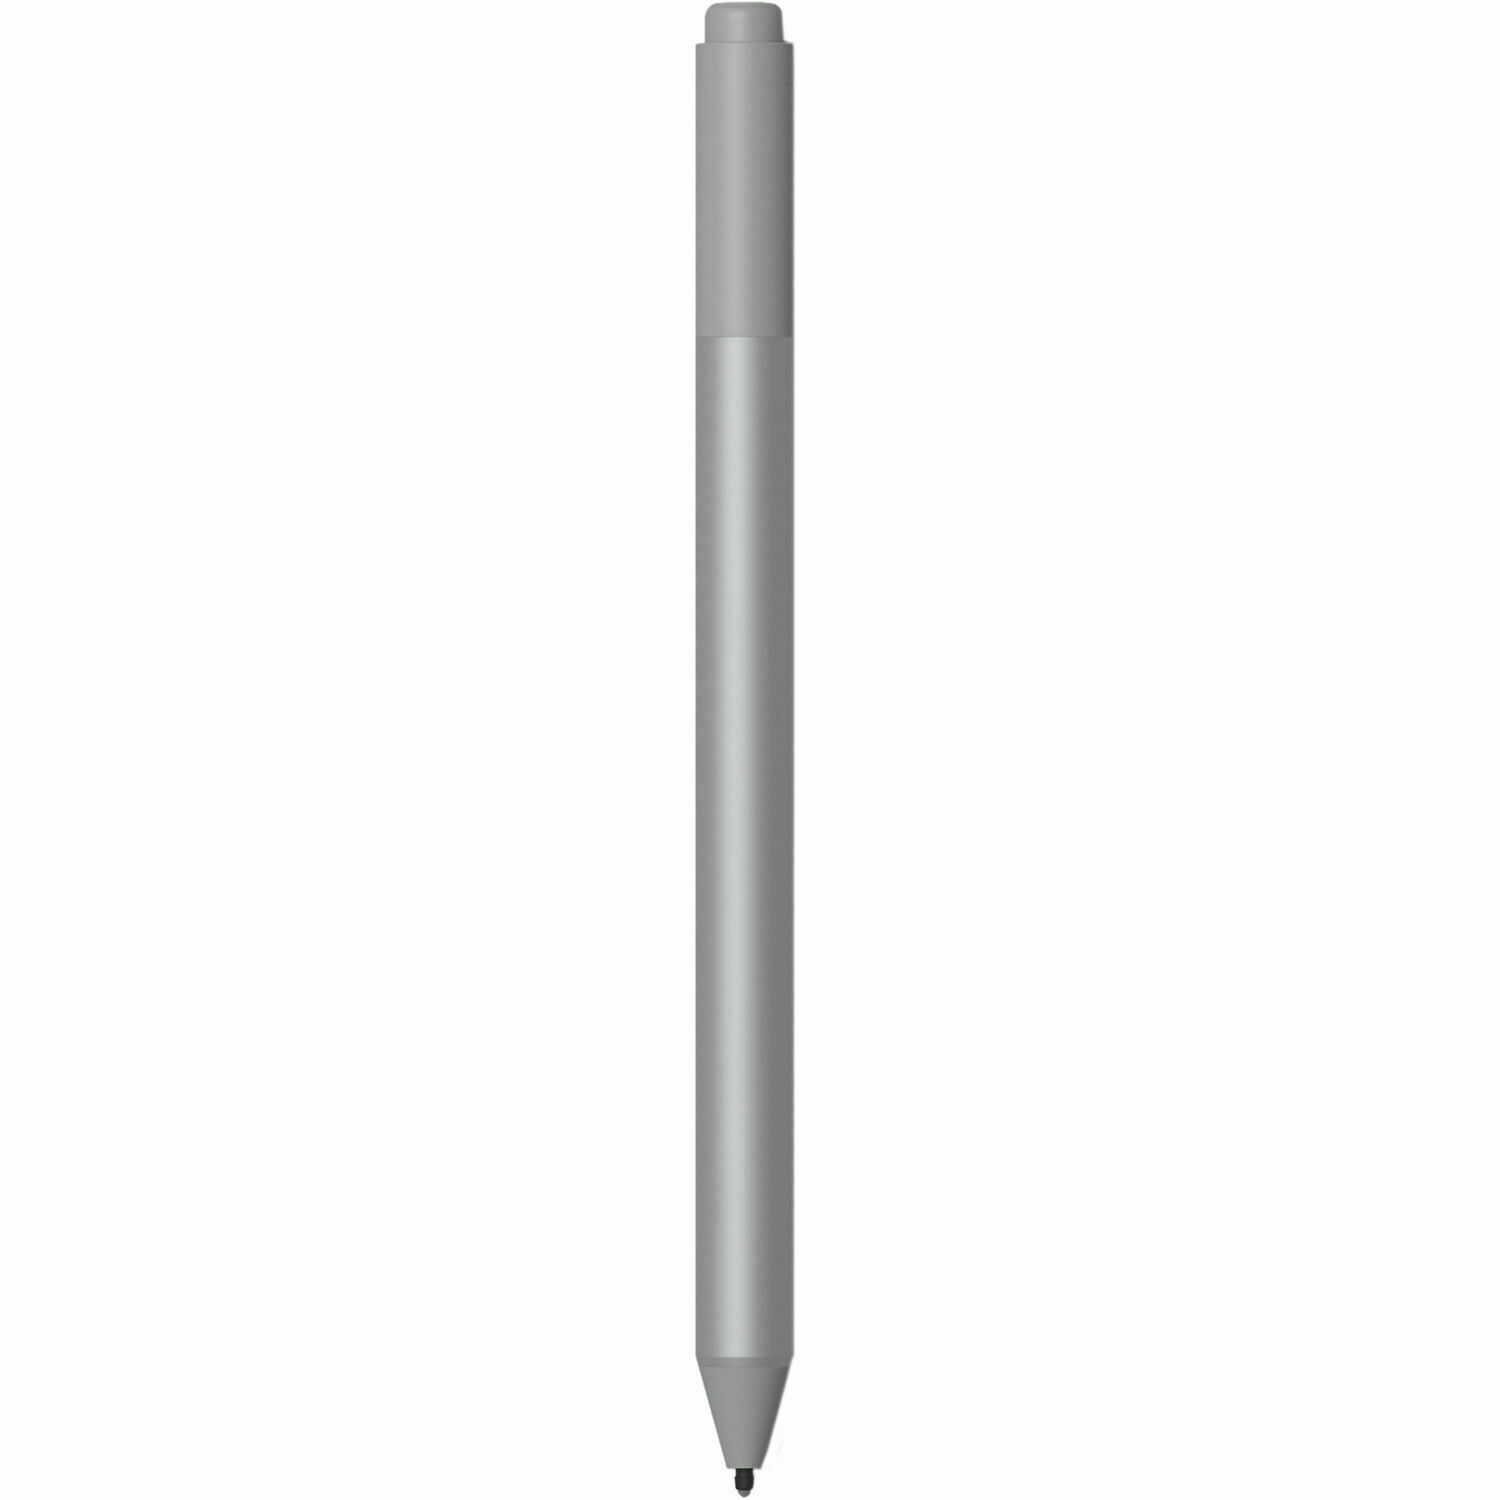 NB Microsoft Surface Stylus Pen Model: 1776- Platinum